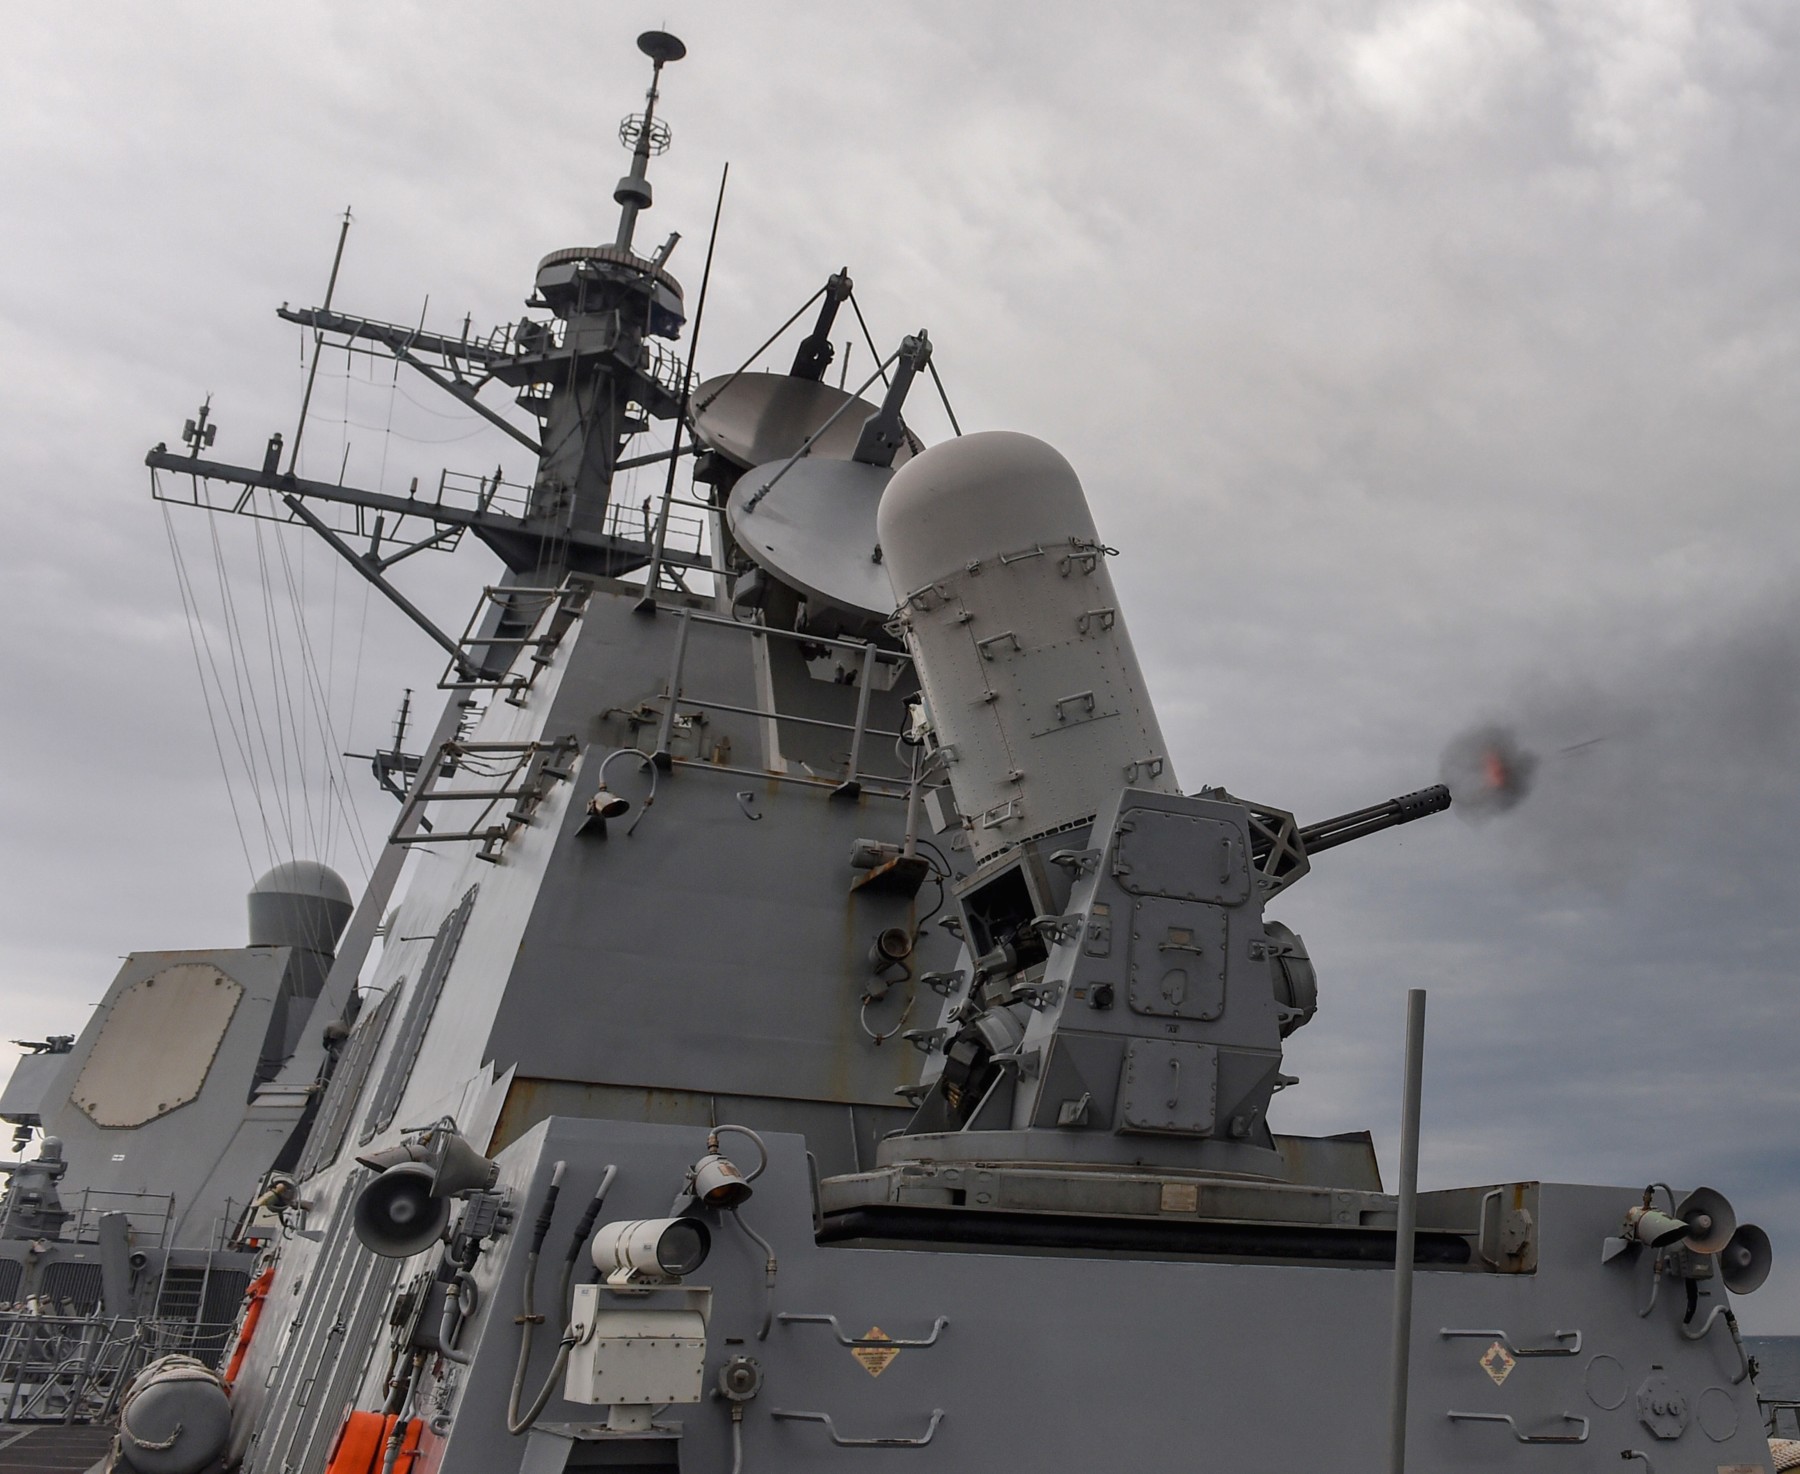 ddg-107 uss gravely arleigh burke class guided missile destroyer aegis us navy mk.15 phalanx ciws 40